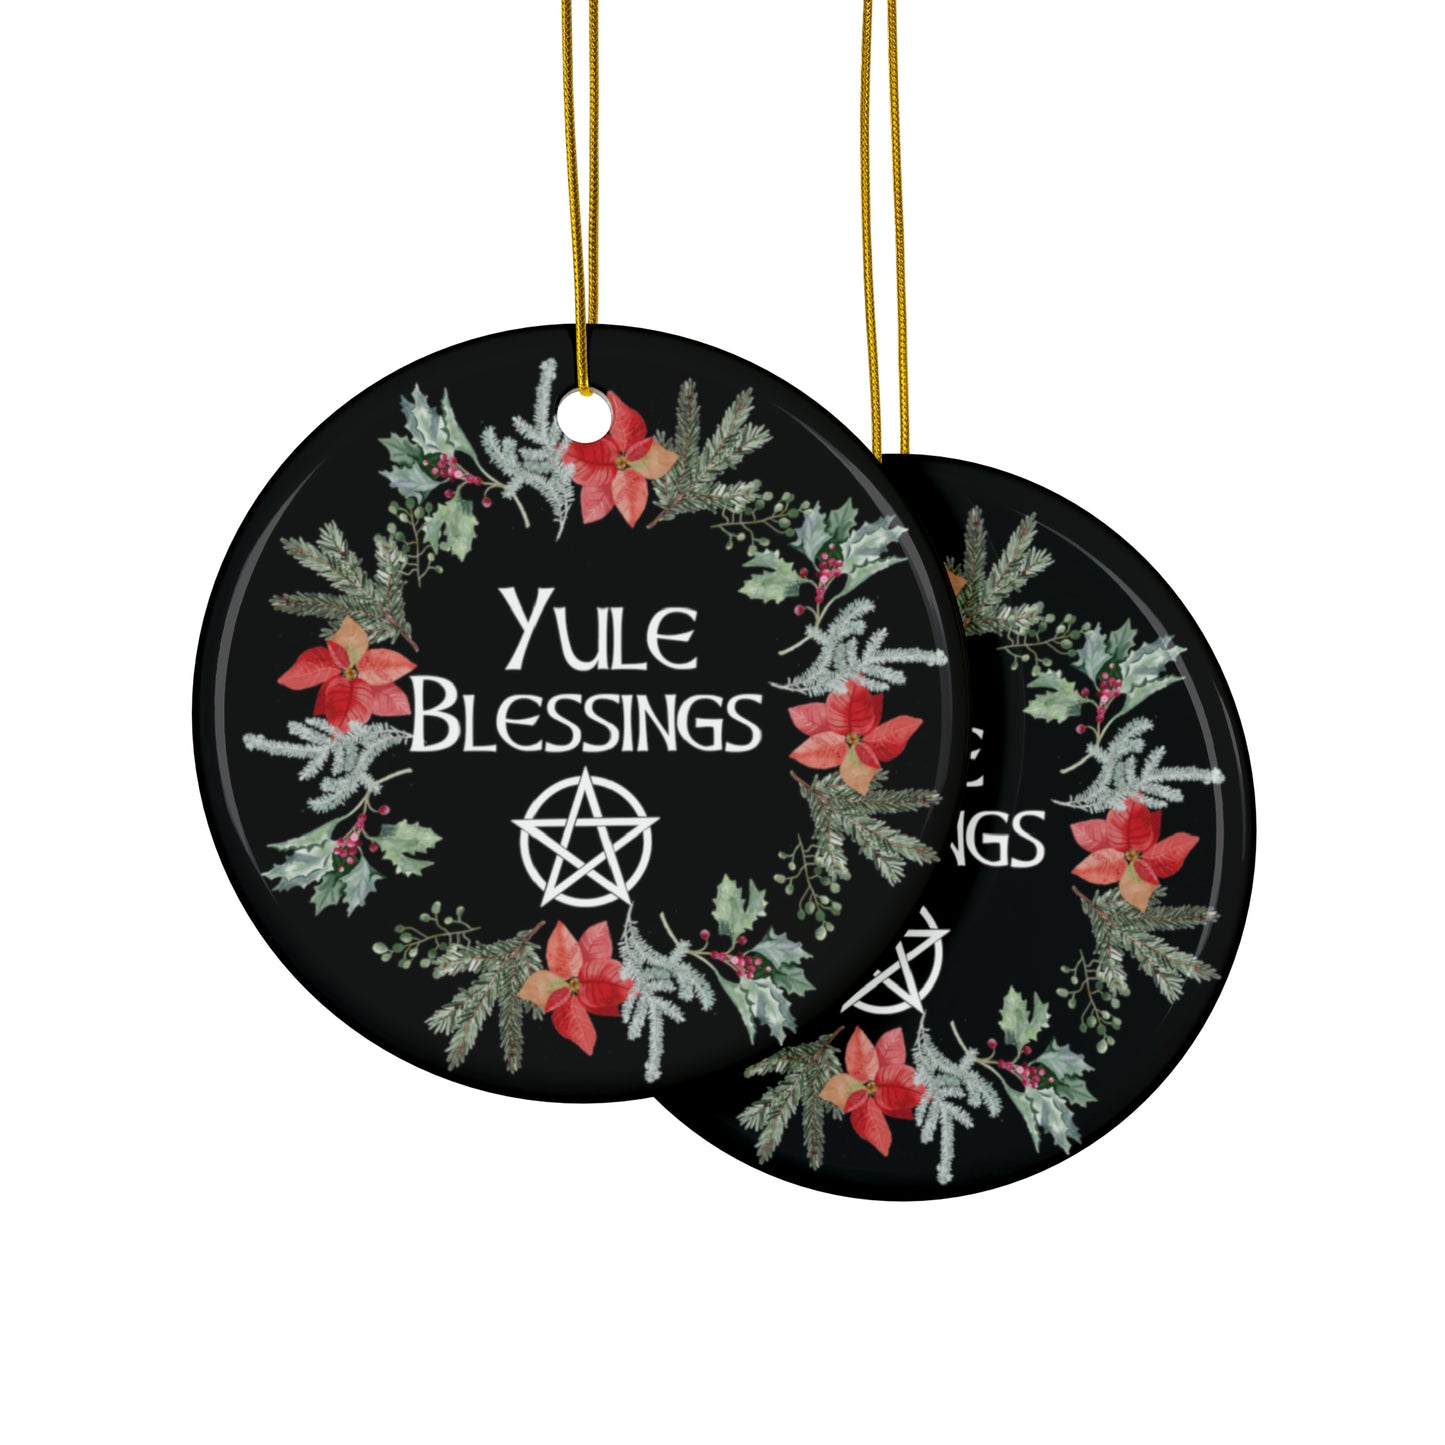 Yule Blessings Wreath Ornament | Circle, Star, Heart, Snowflake Shapes